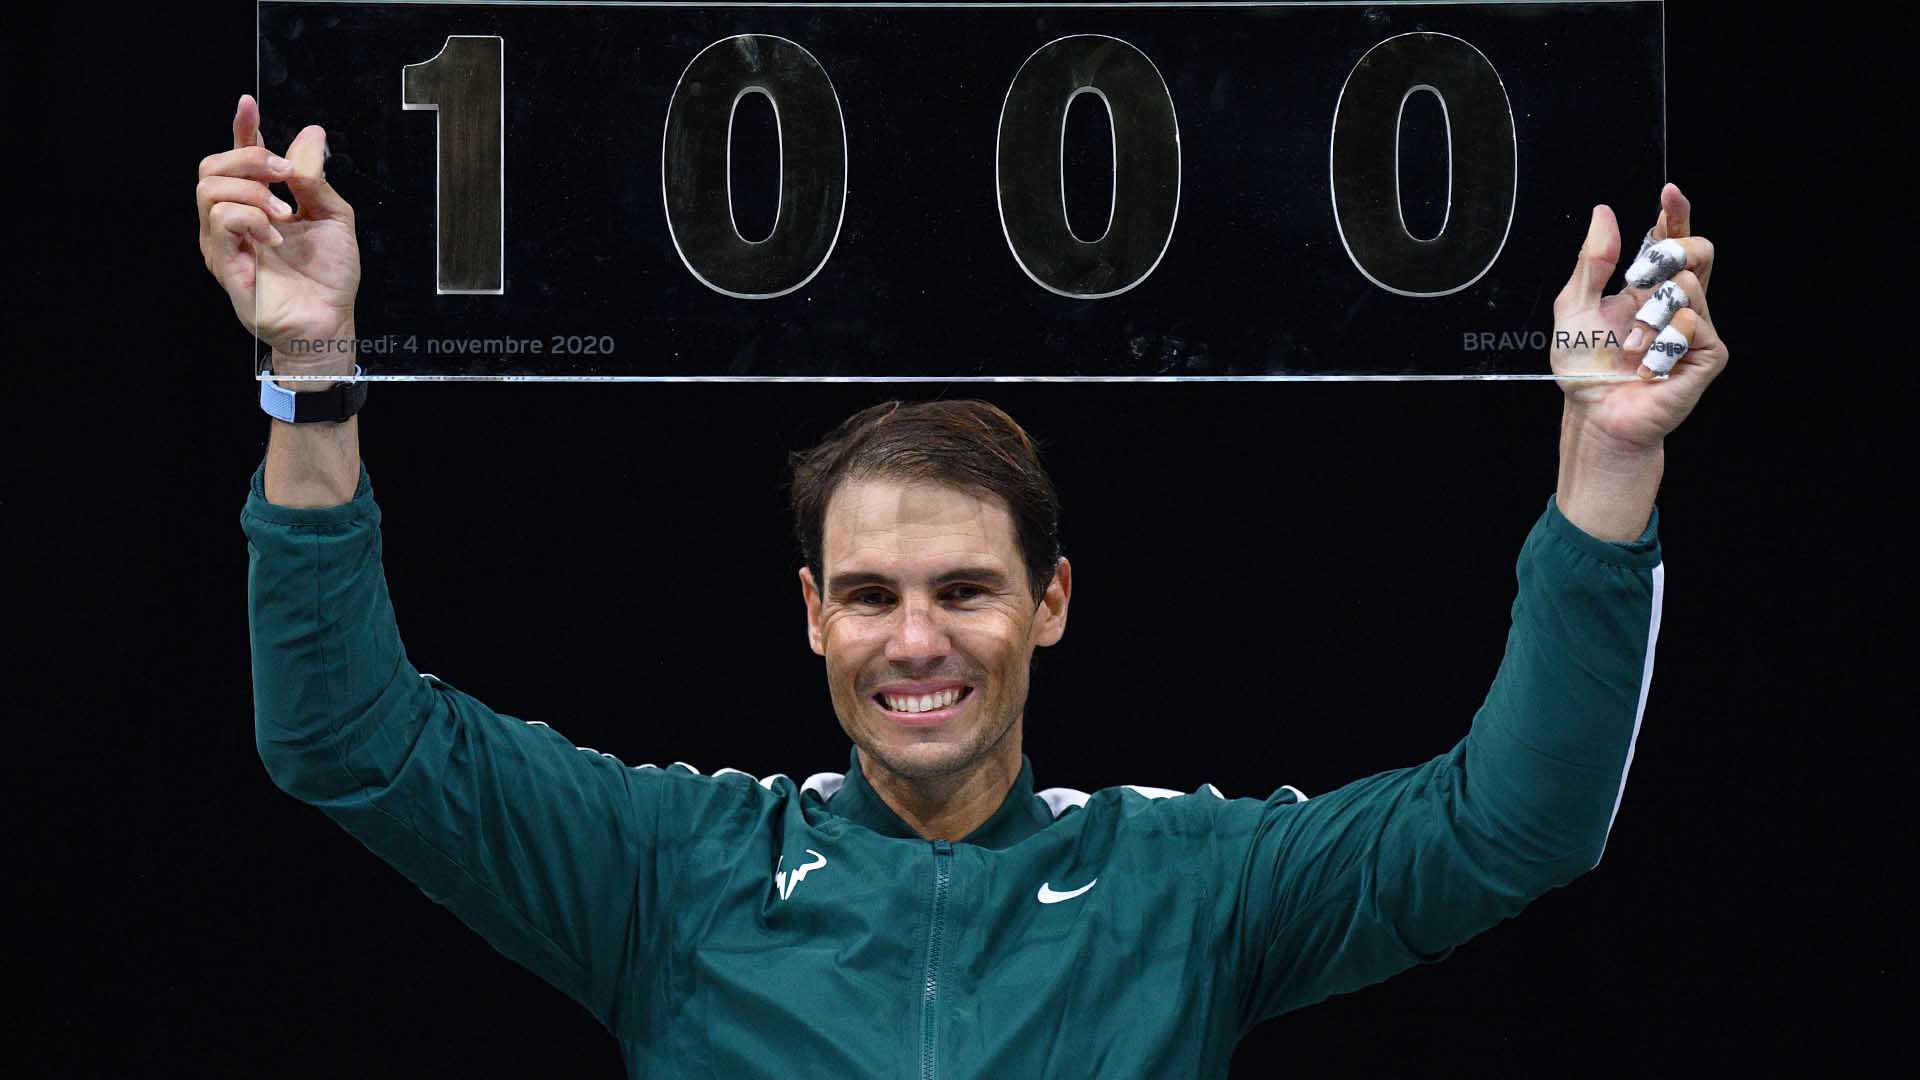 Rafael Nadal owns a 1,000-201 tour-level record.